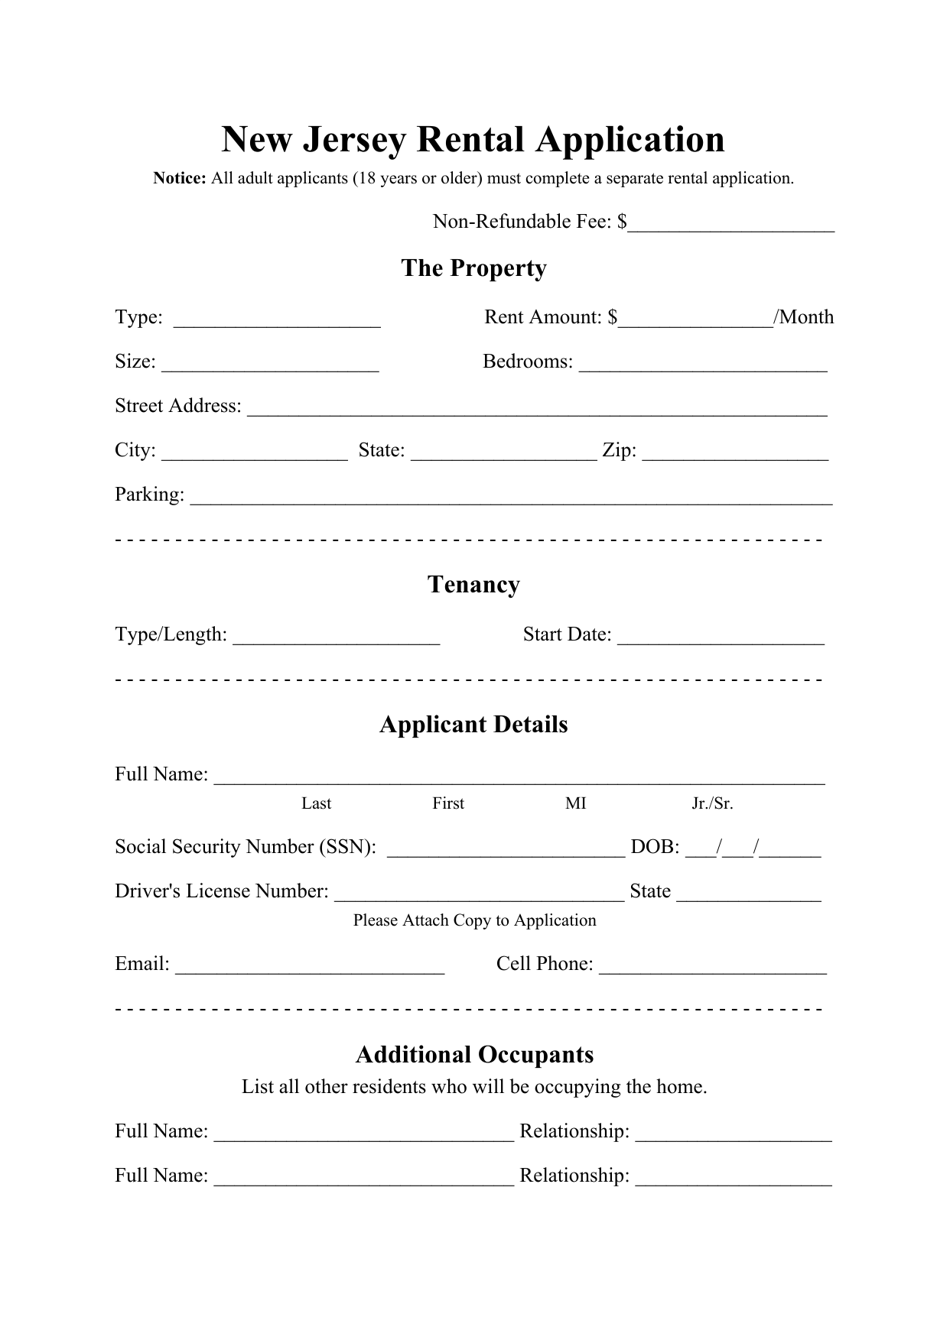 new-jersey-rental-application-form-download-printable-pdf-templateroller